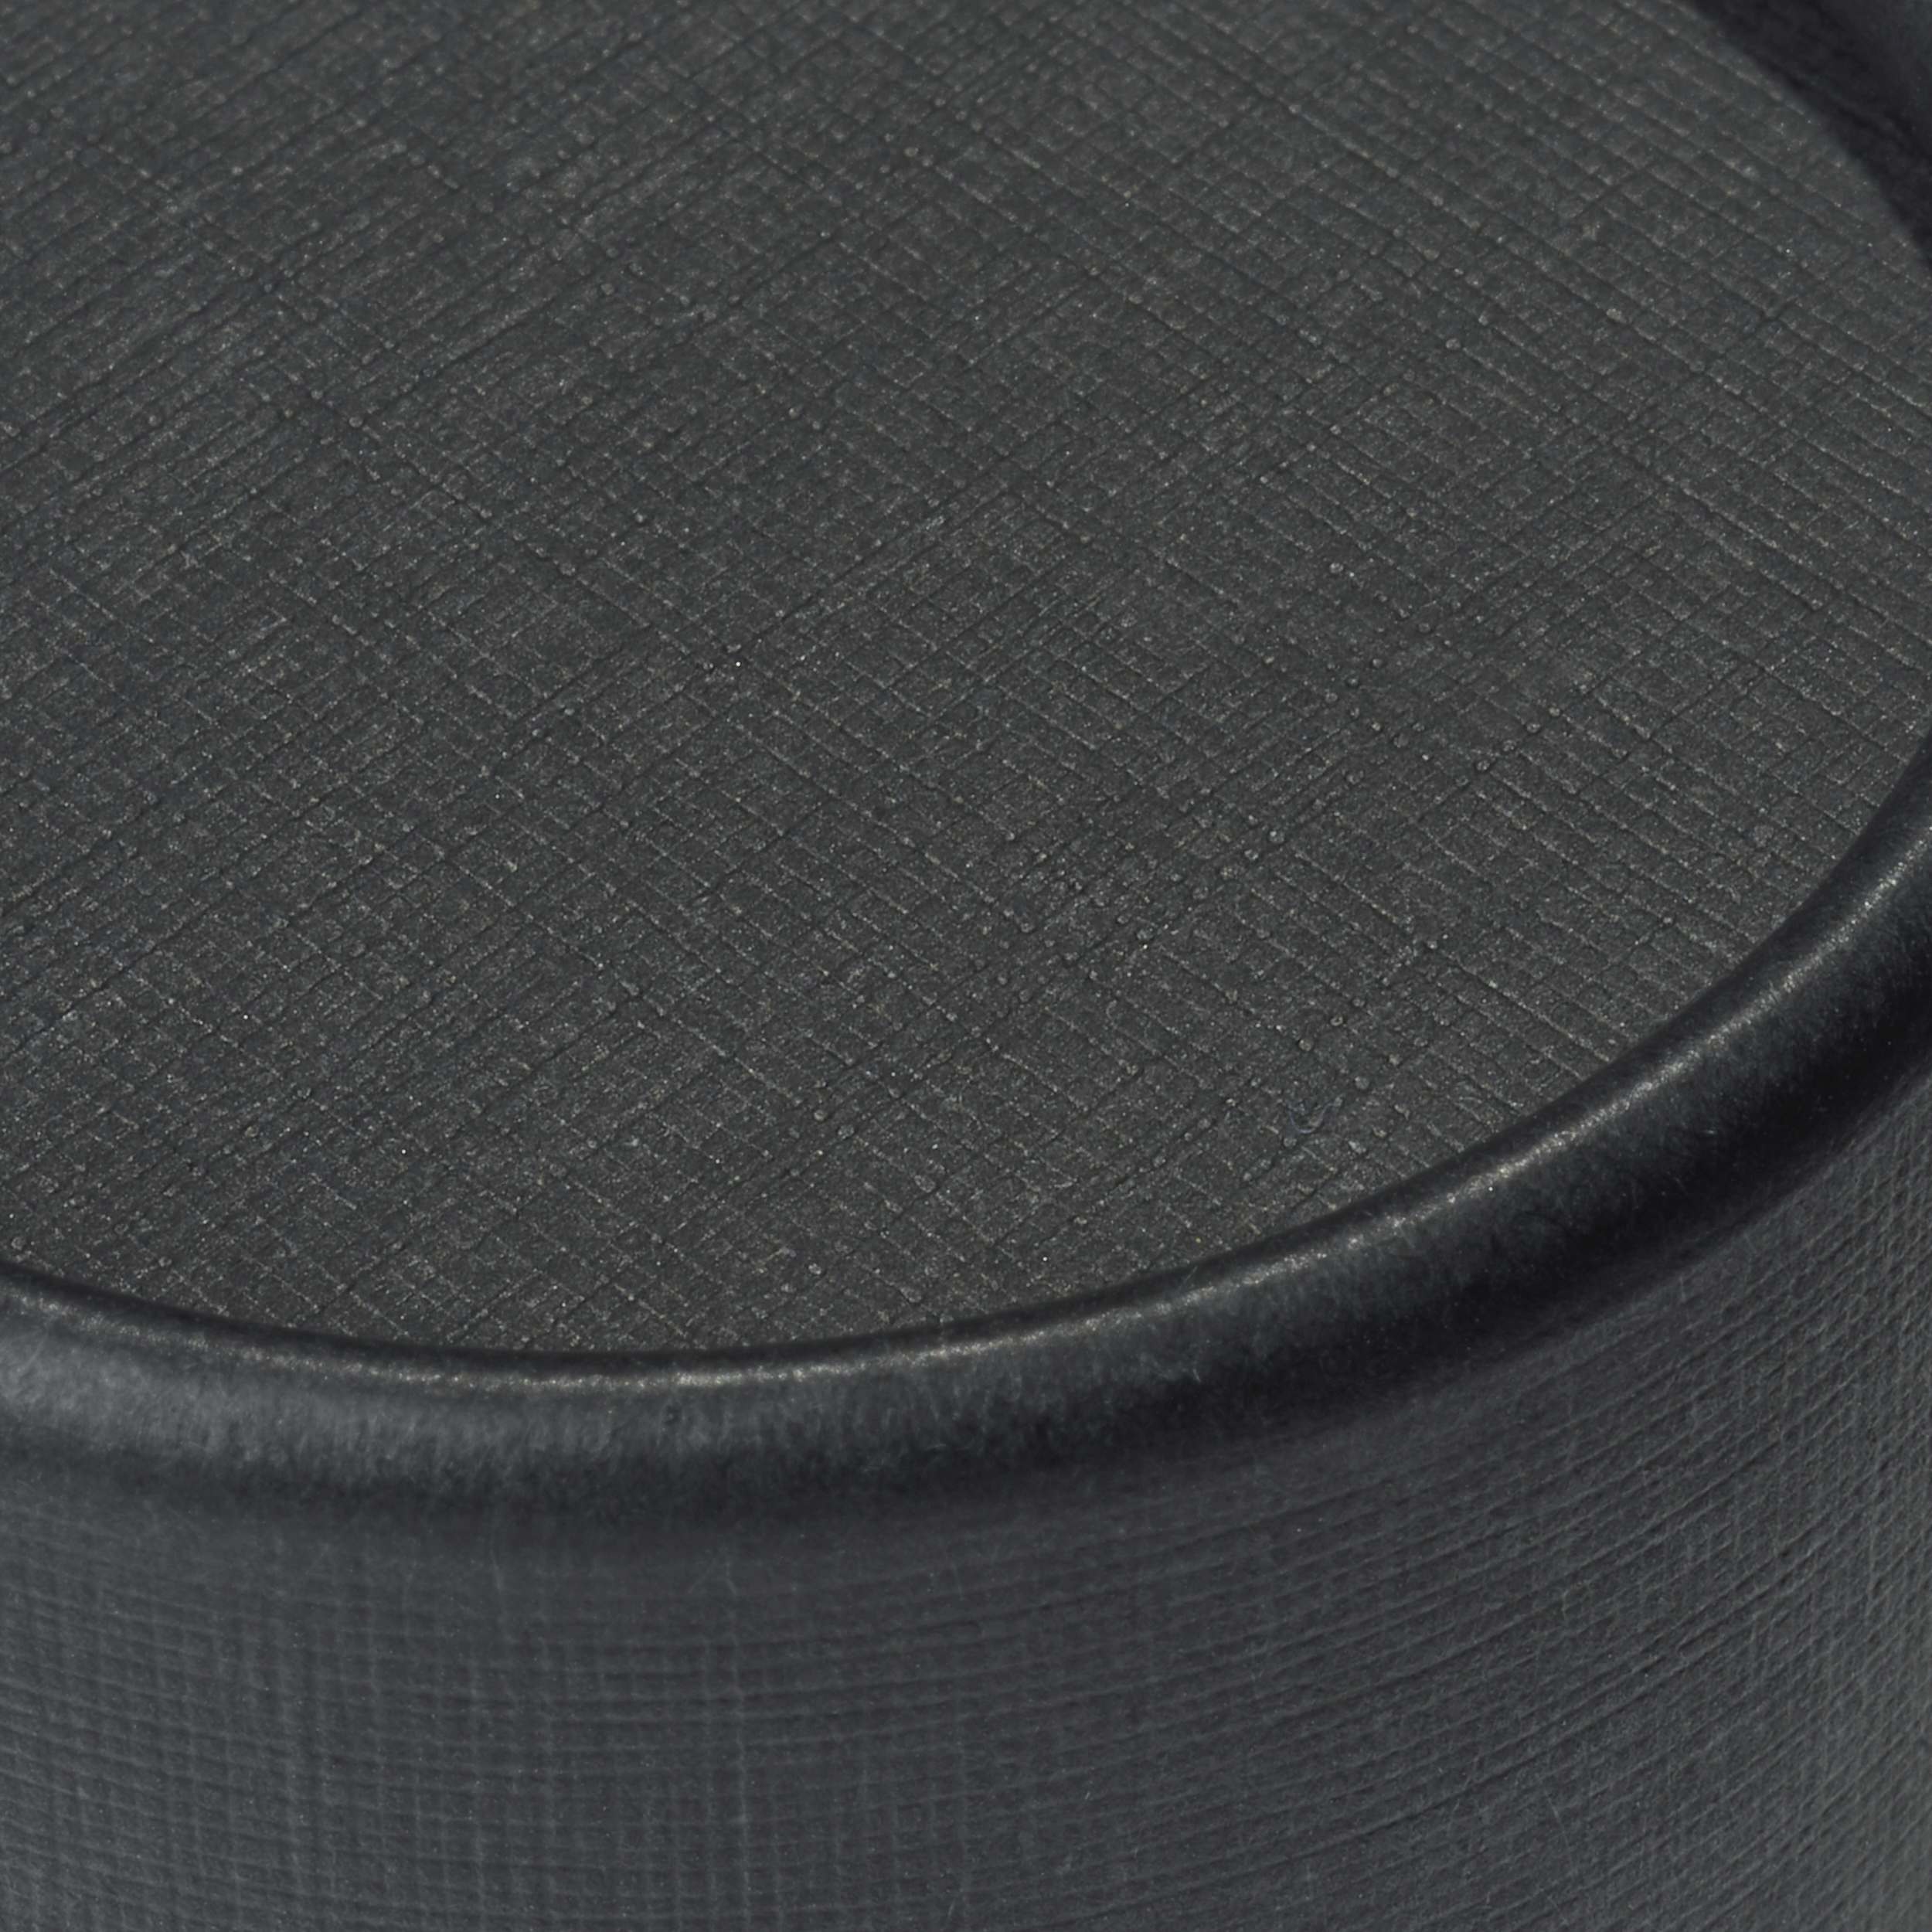 50 Pappdosen schwarz linon  |100 x 79 mm | food grade